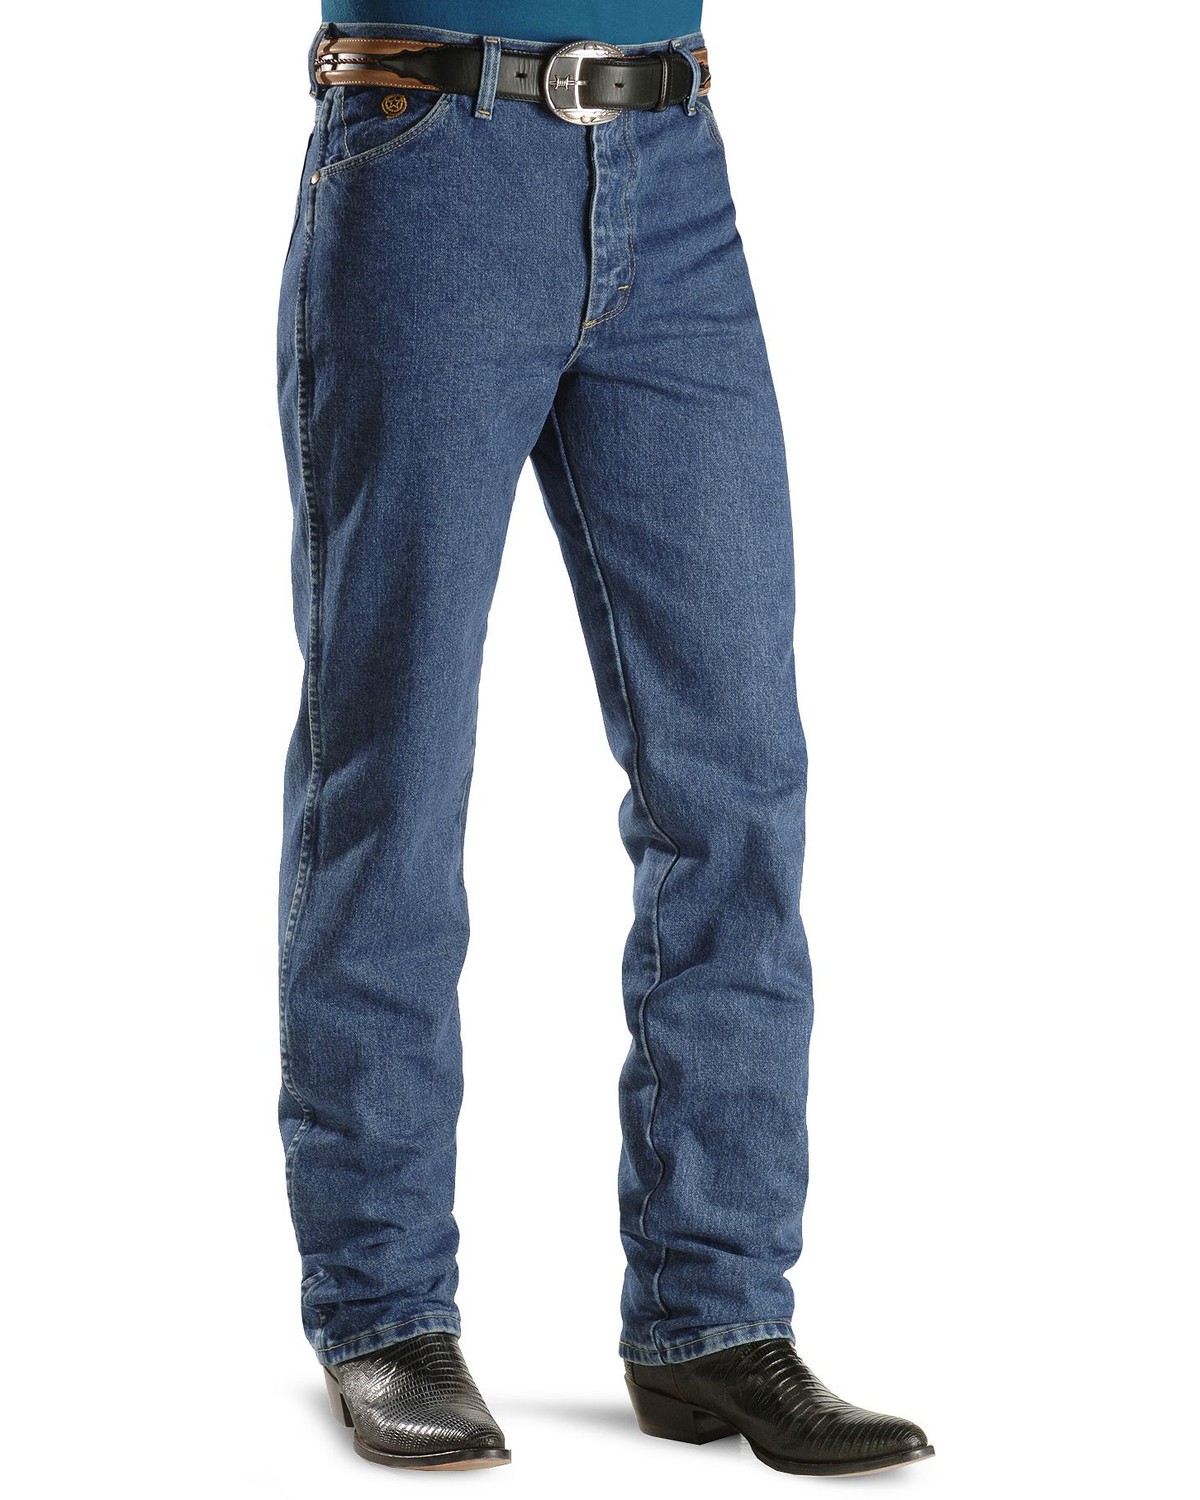 Wrangler Jeans - George Strait 936 Slim | Sheplers